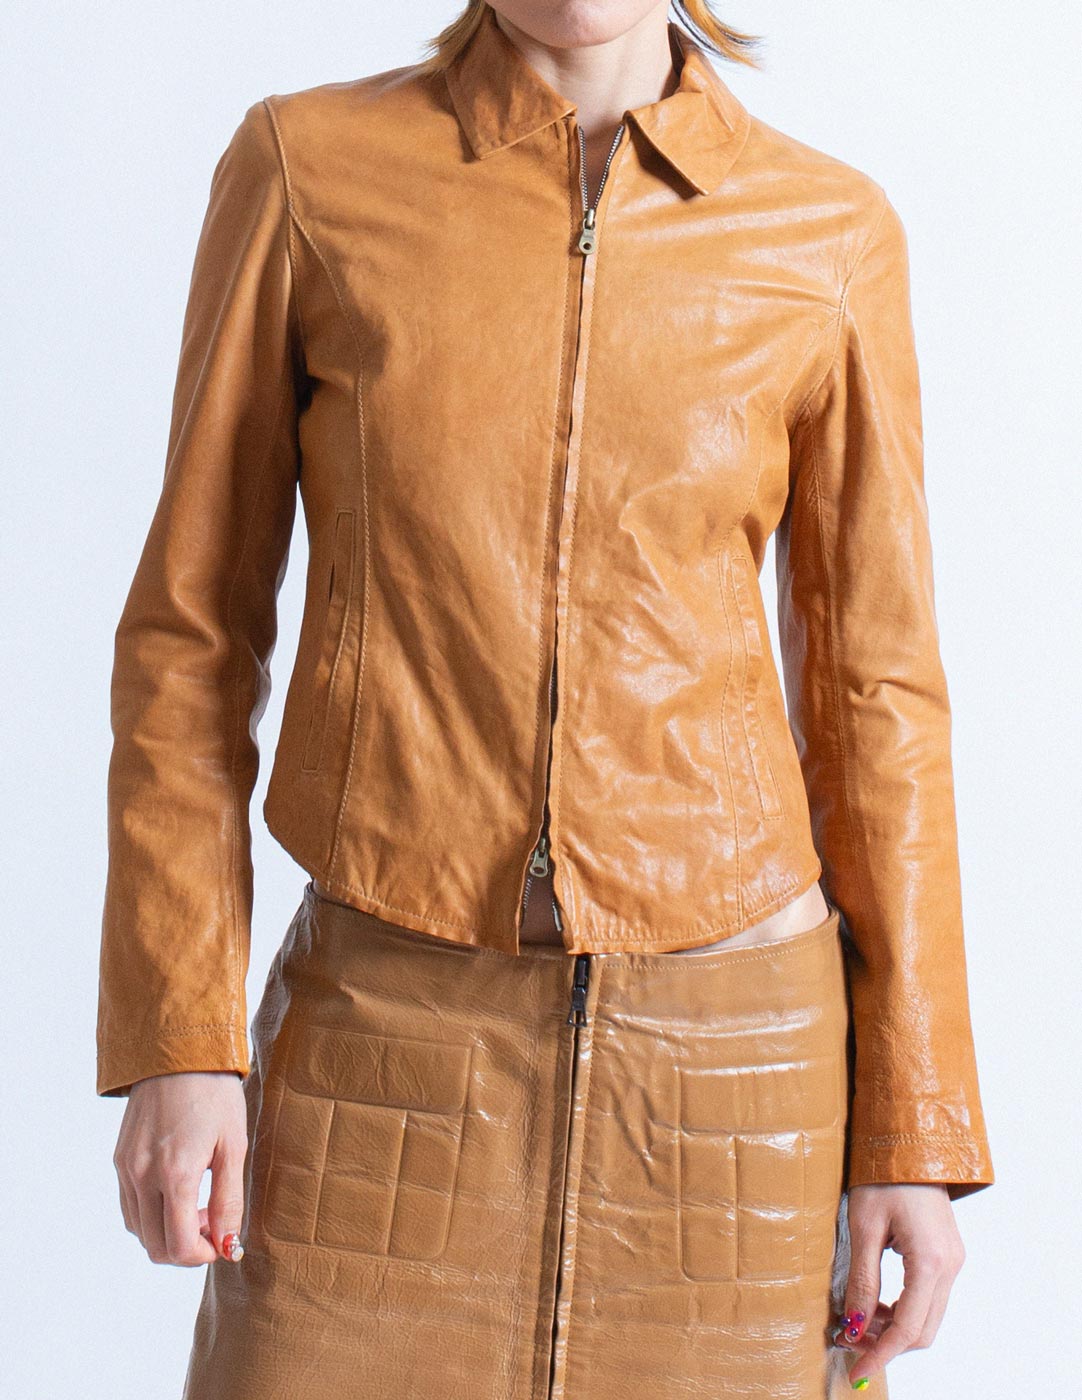 Dries Van Noten zipped leather jacket front detail